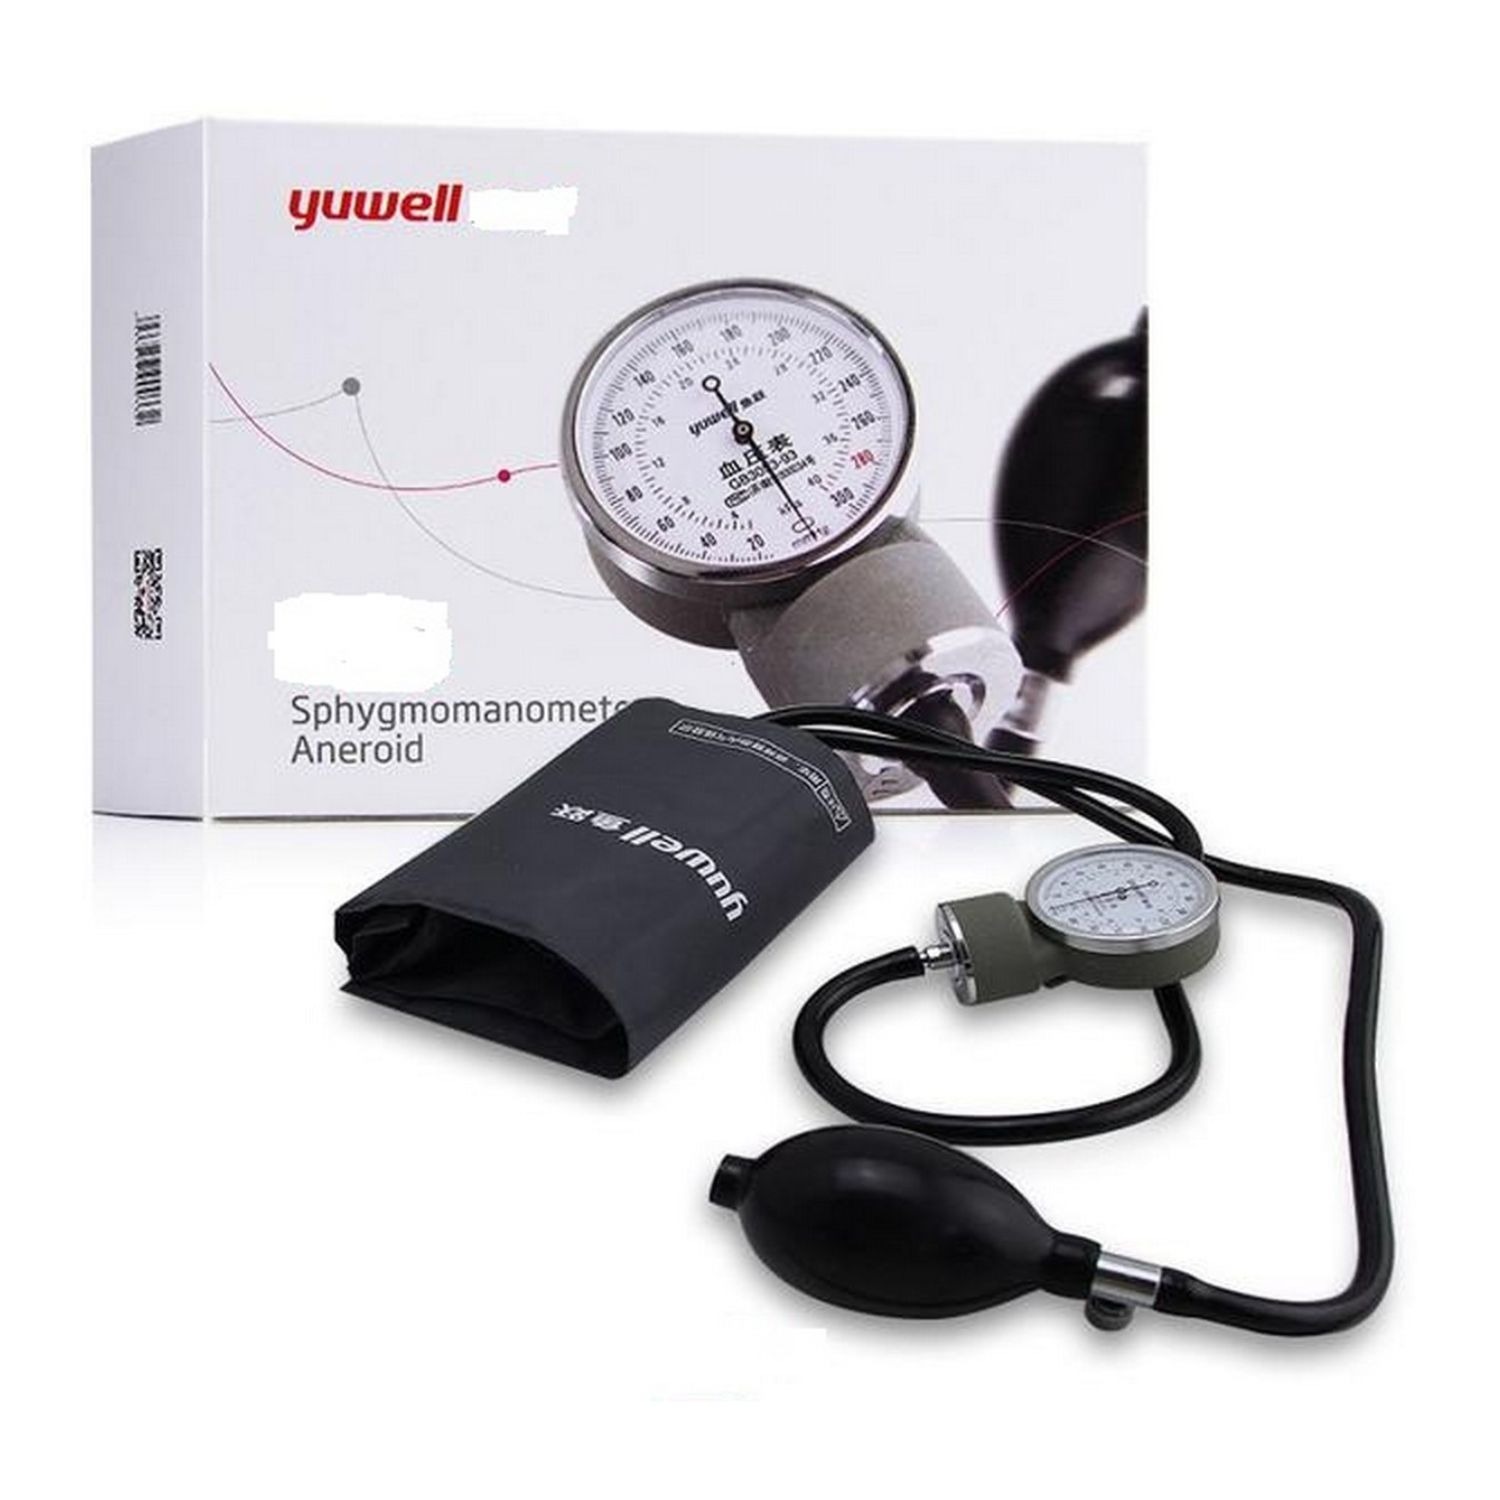 Yuwell-Sphygmomanometer-Dial-Blood-Pressure-Apparatus